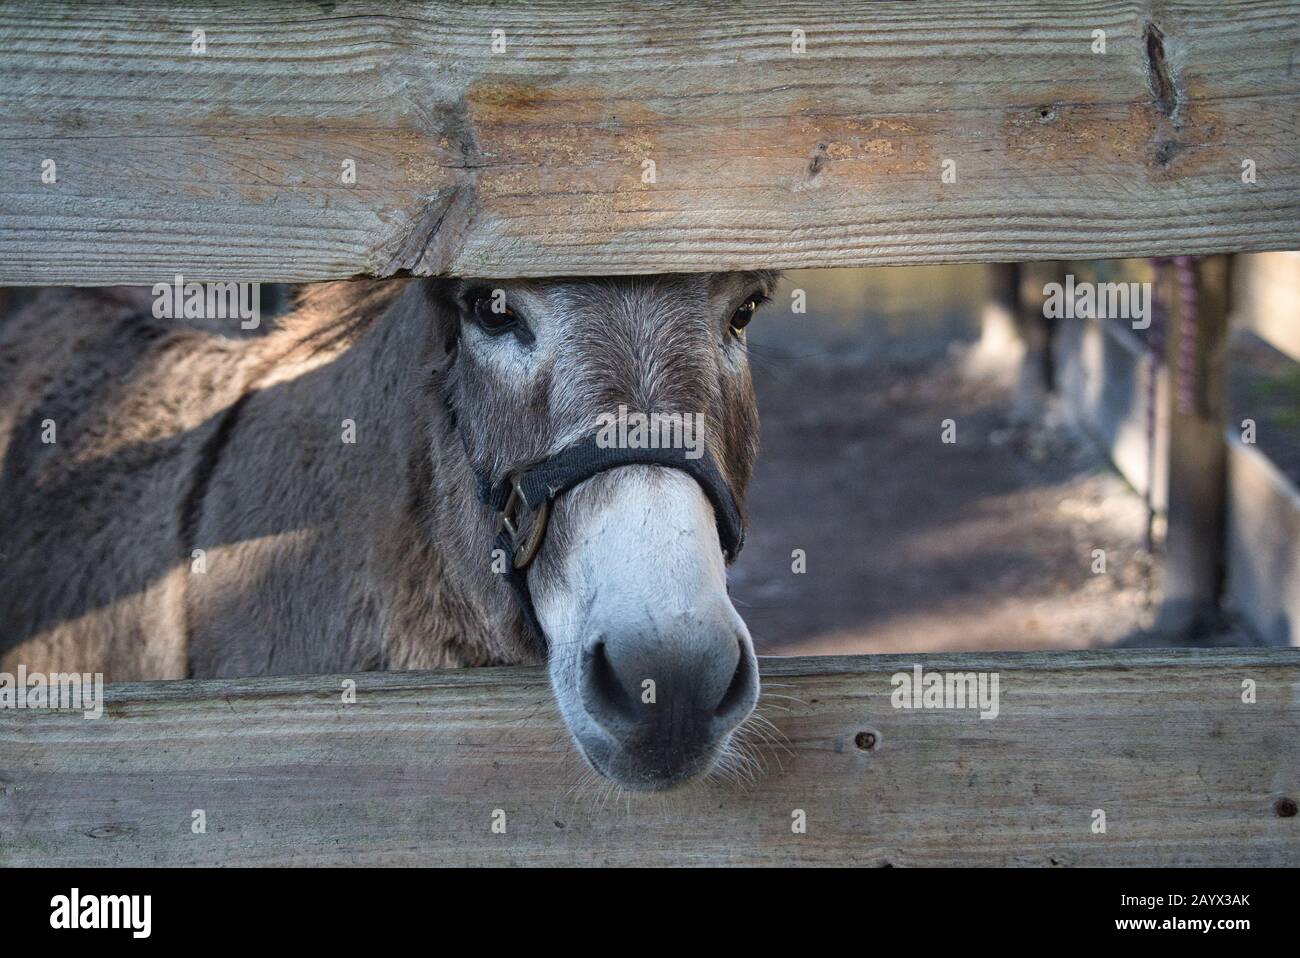 Portrait head of a brown donkey with sad black eye Stock Photo